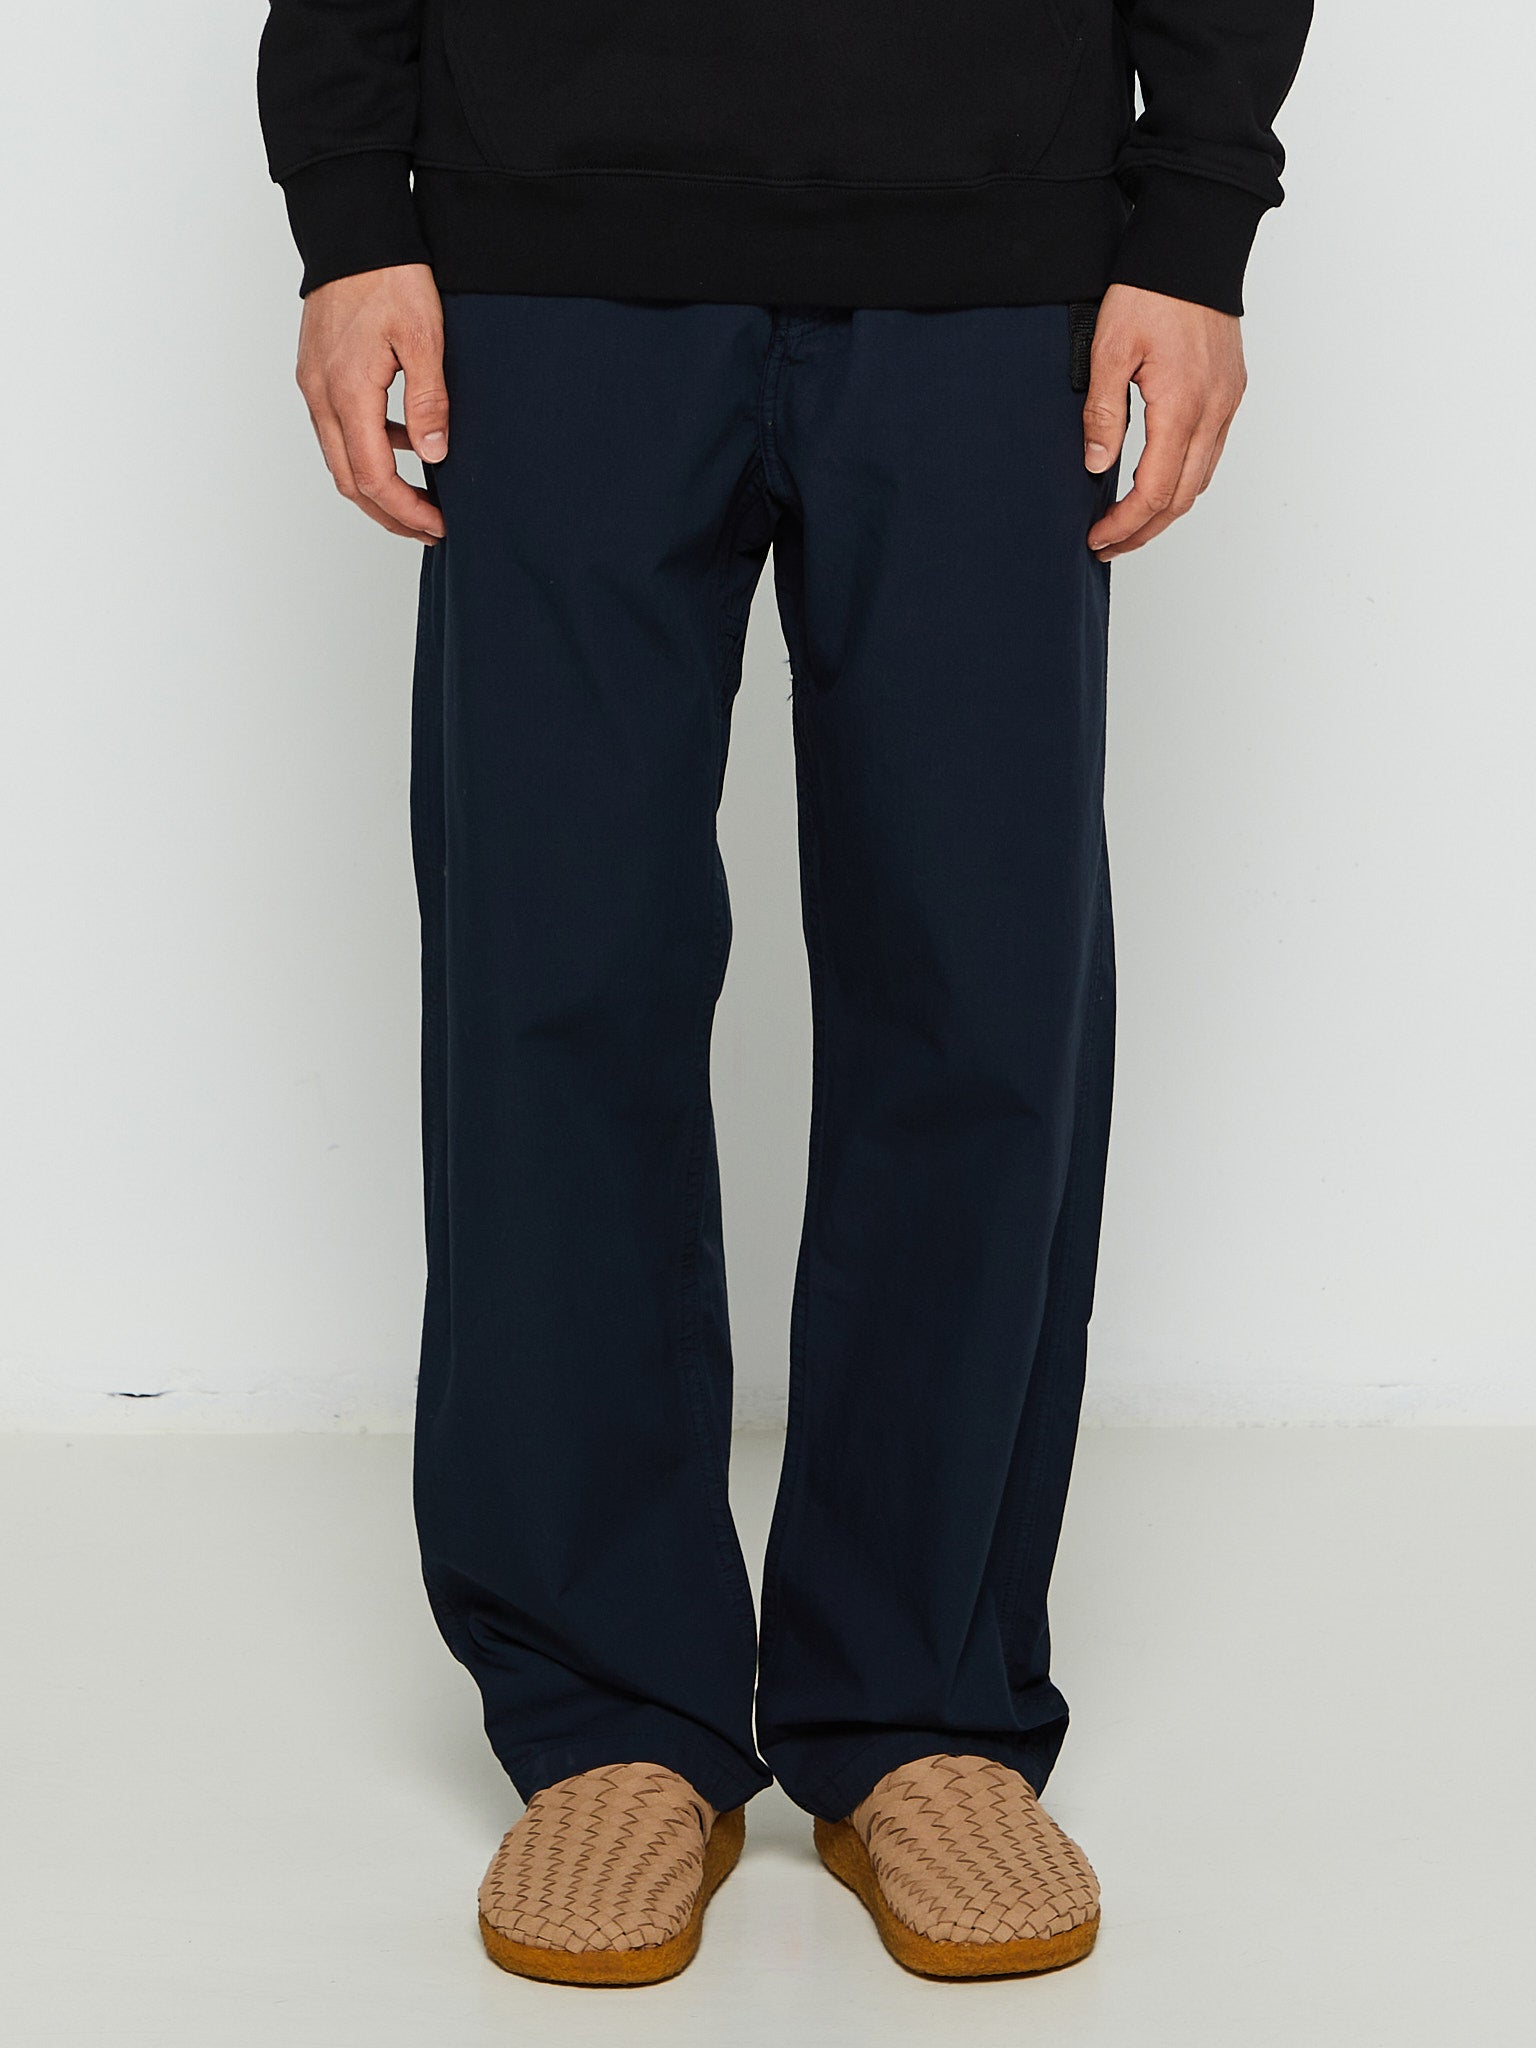 Dancer - Belted Simple Pants in Navy